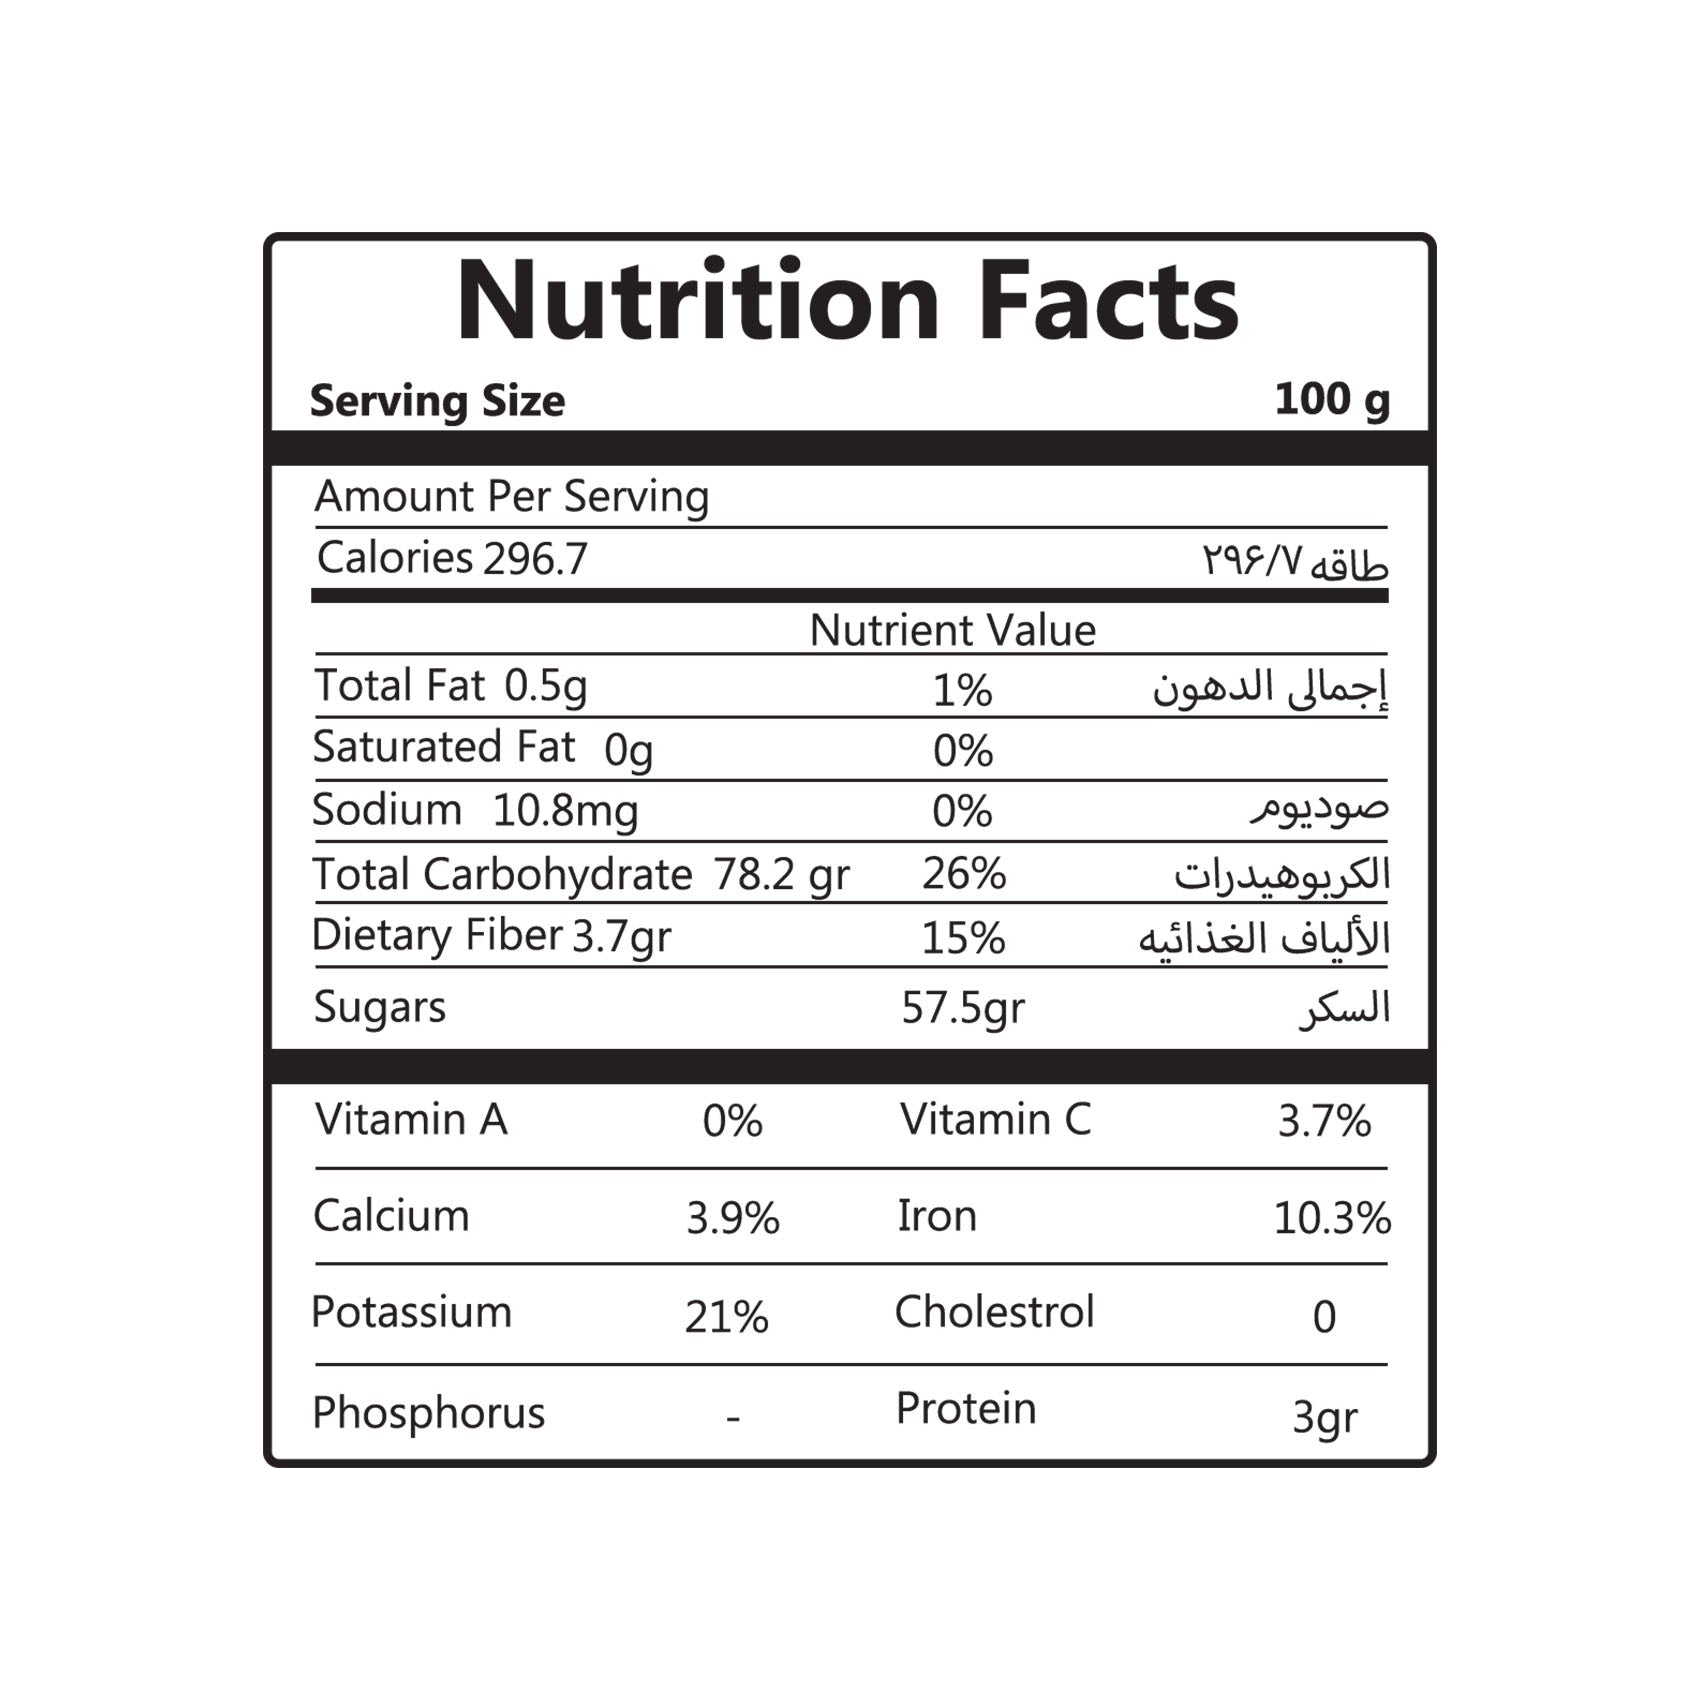 Raiisn calories, raisin potassium, raisin calories 100g, raisin nutrition facts